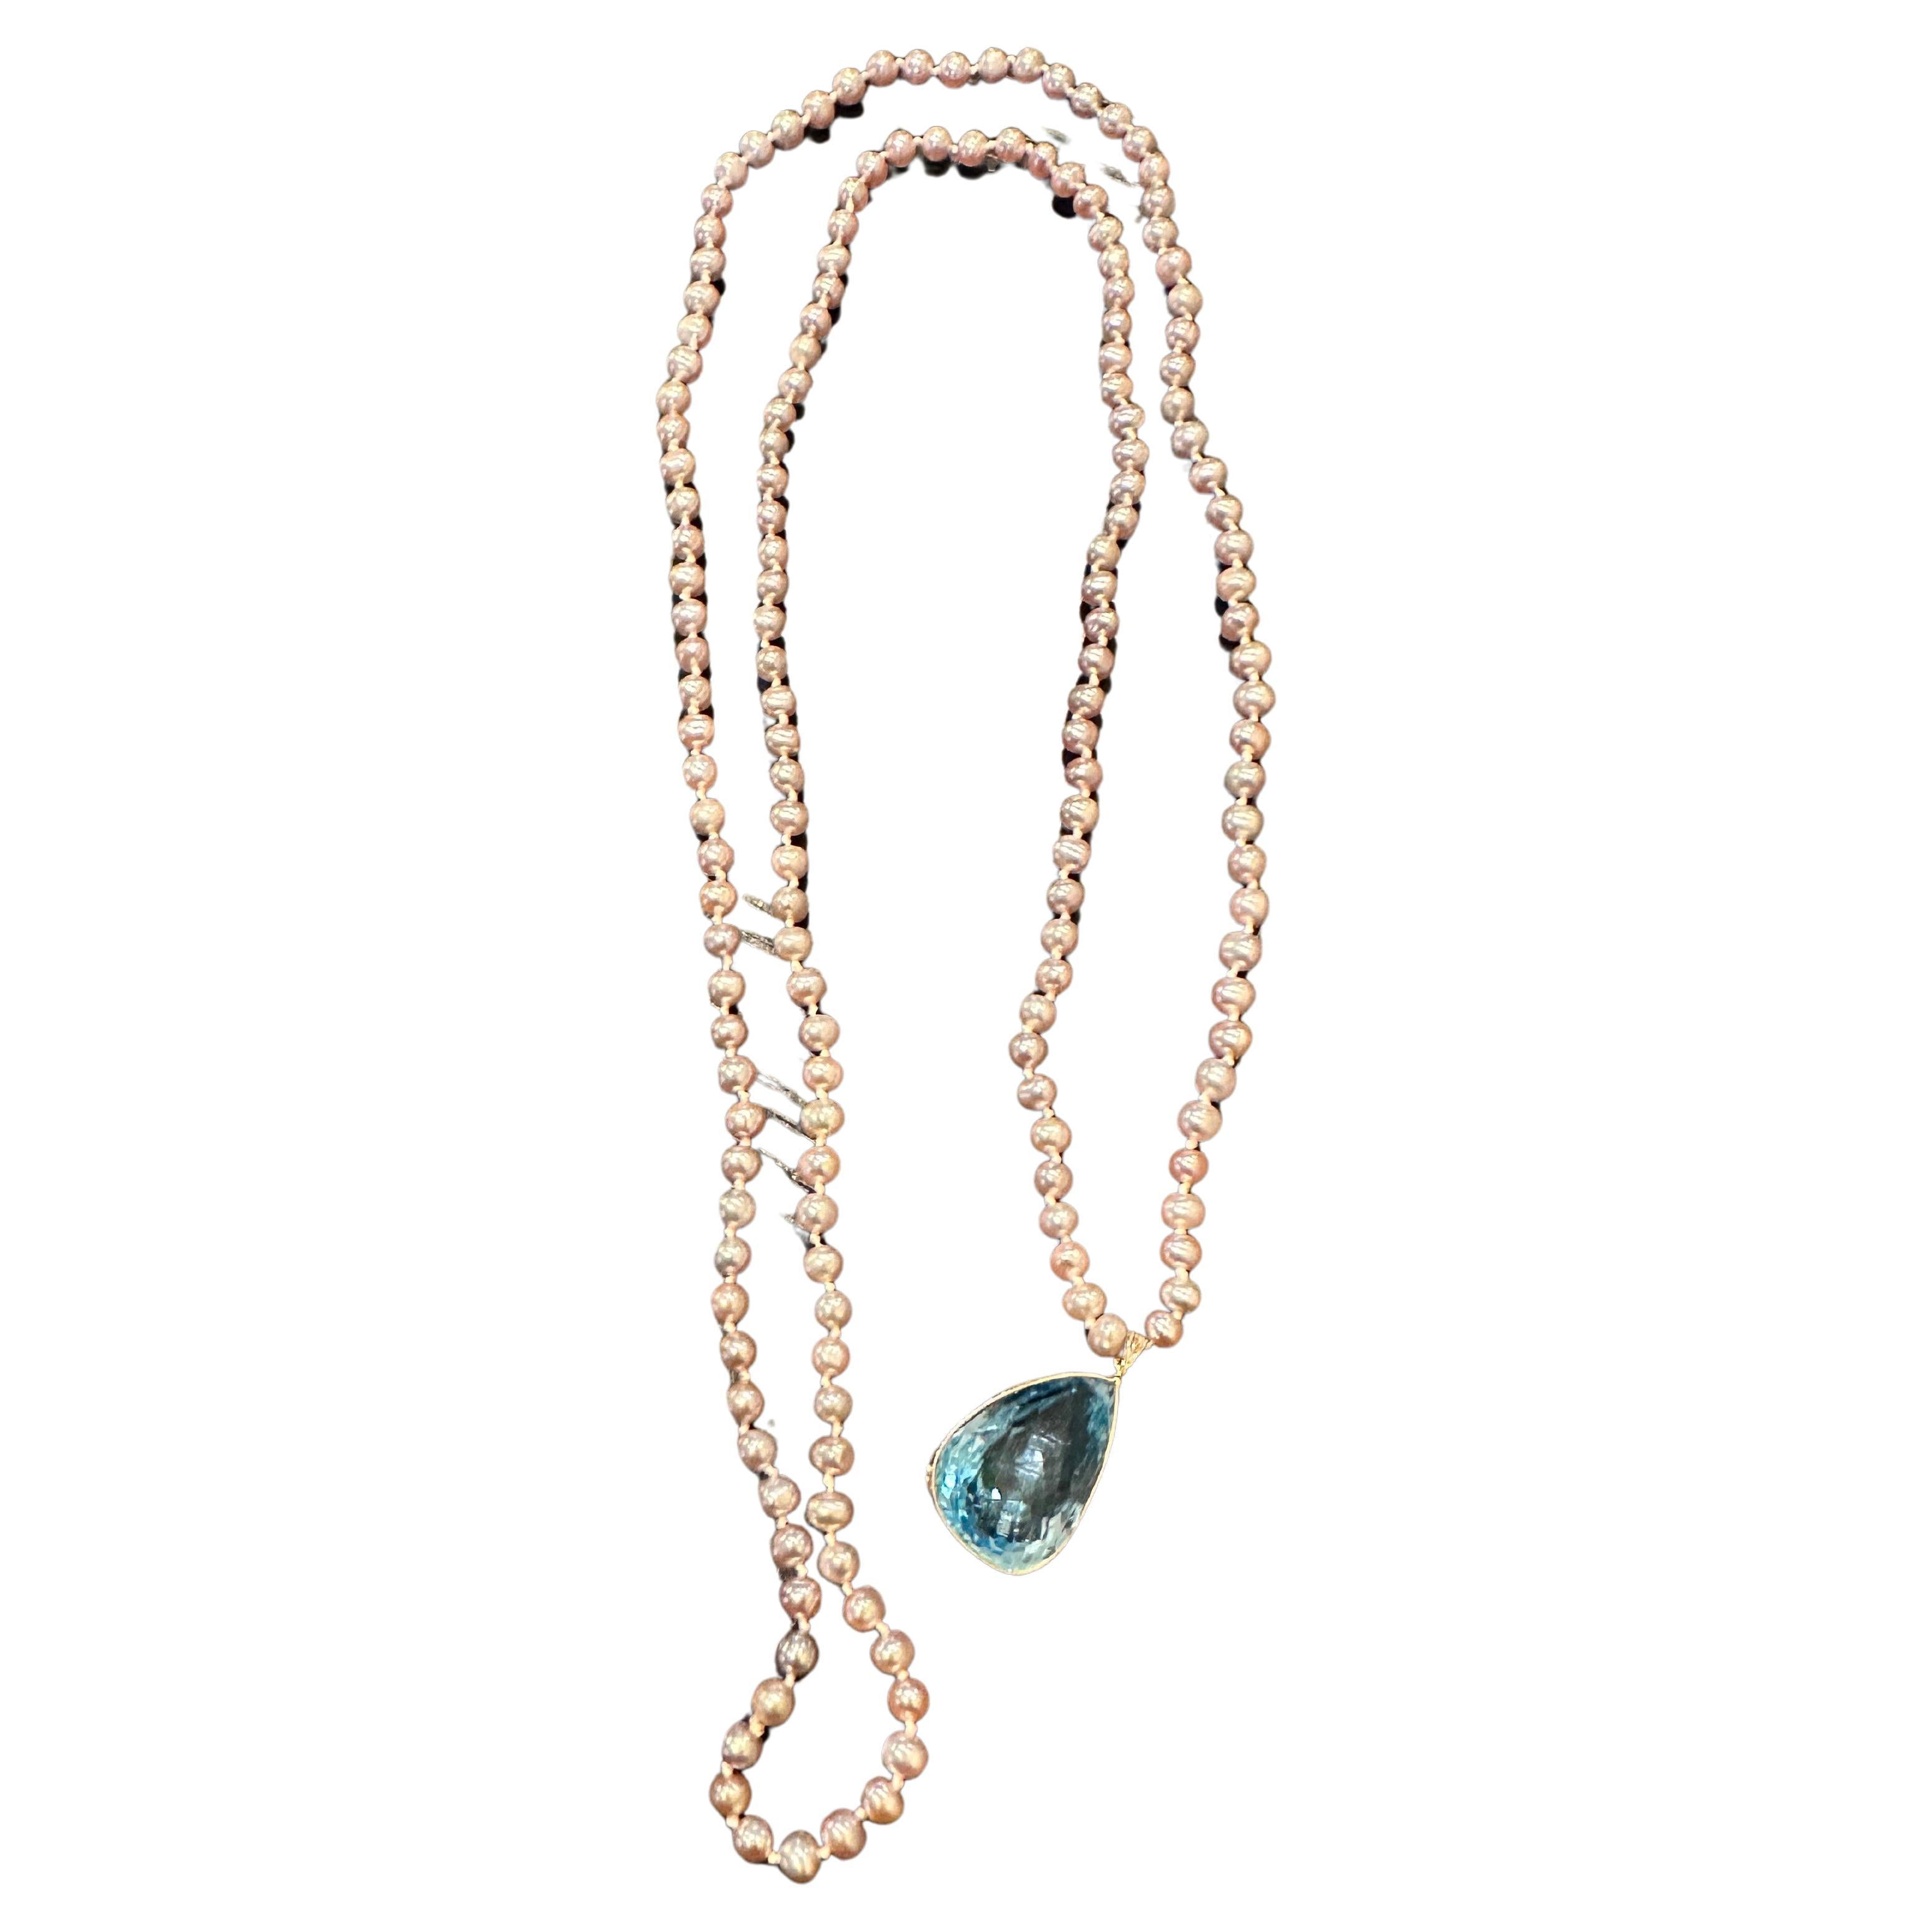 Exquisite Topaz necklace 14 Karat Gold pearl necklace 30ct HUGE pear topaz 30" 